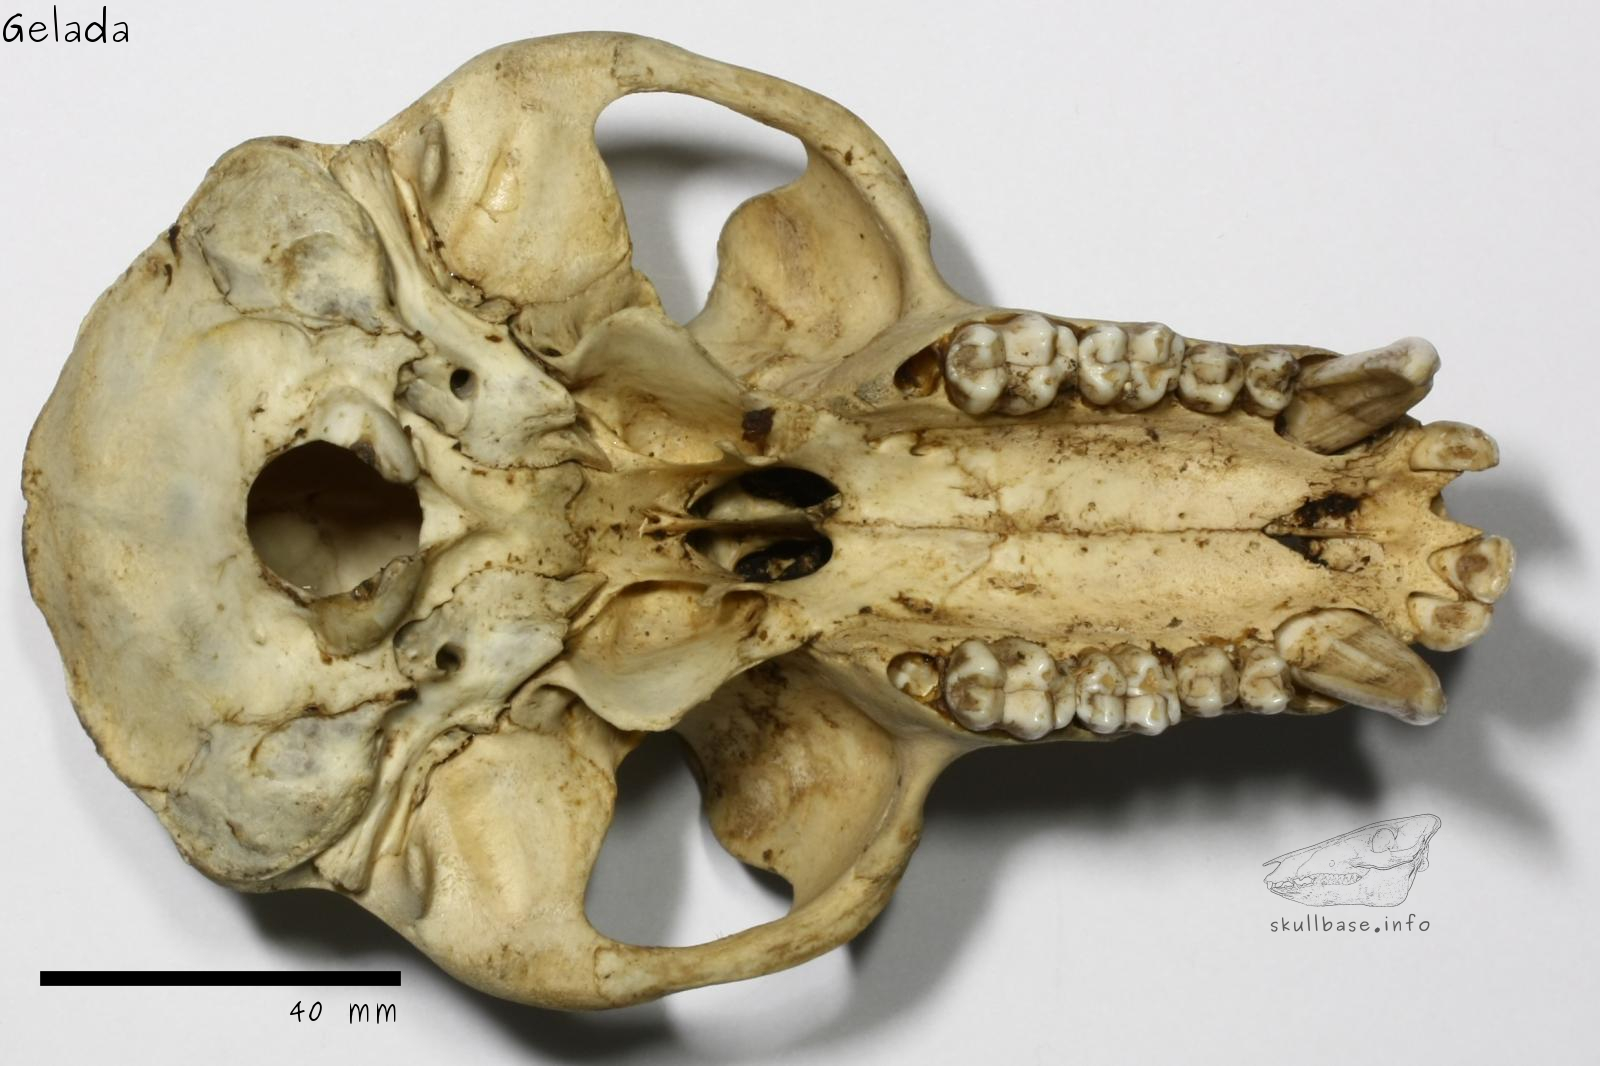 Gelada (Theropithecus gelada) skull ventral view